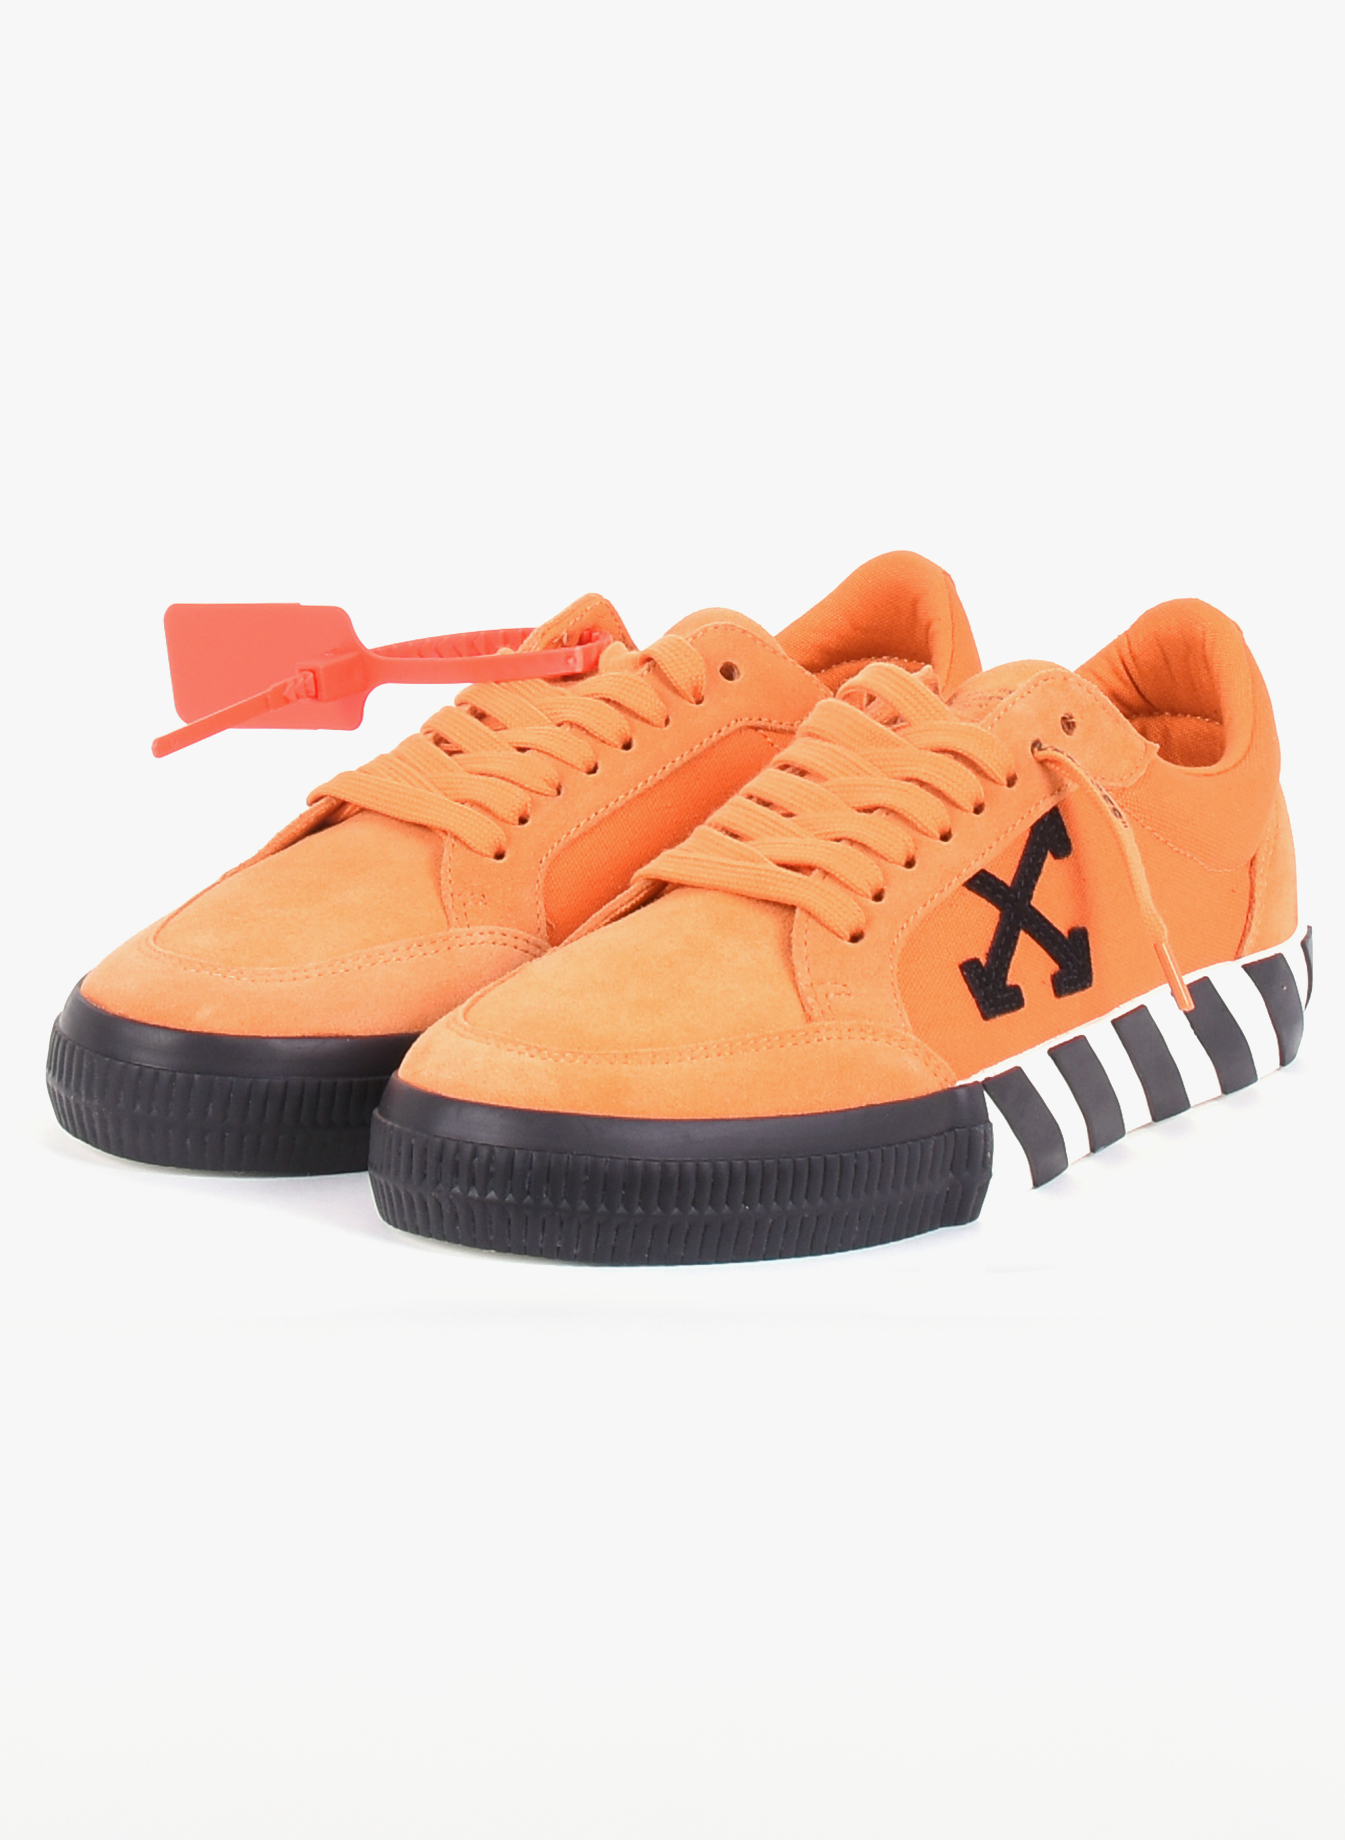 off white orange sneakers